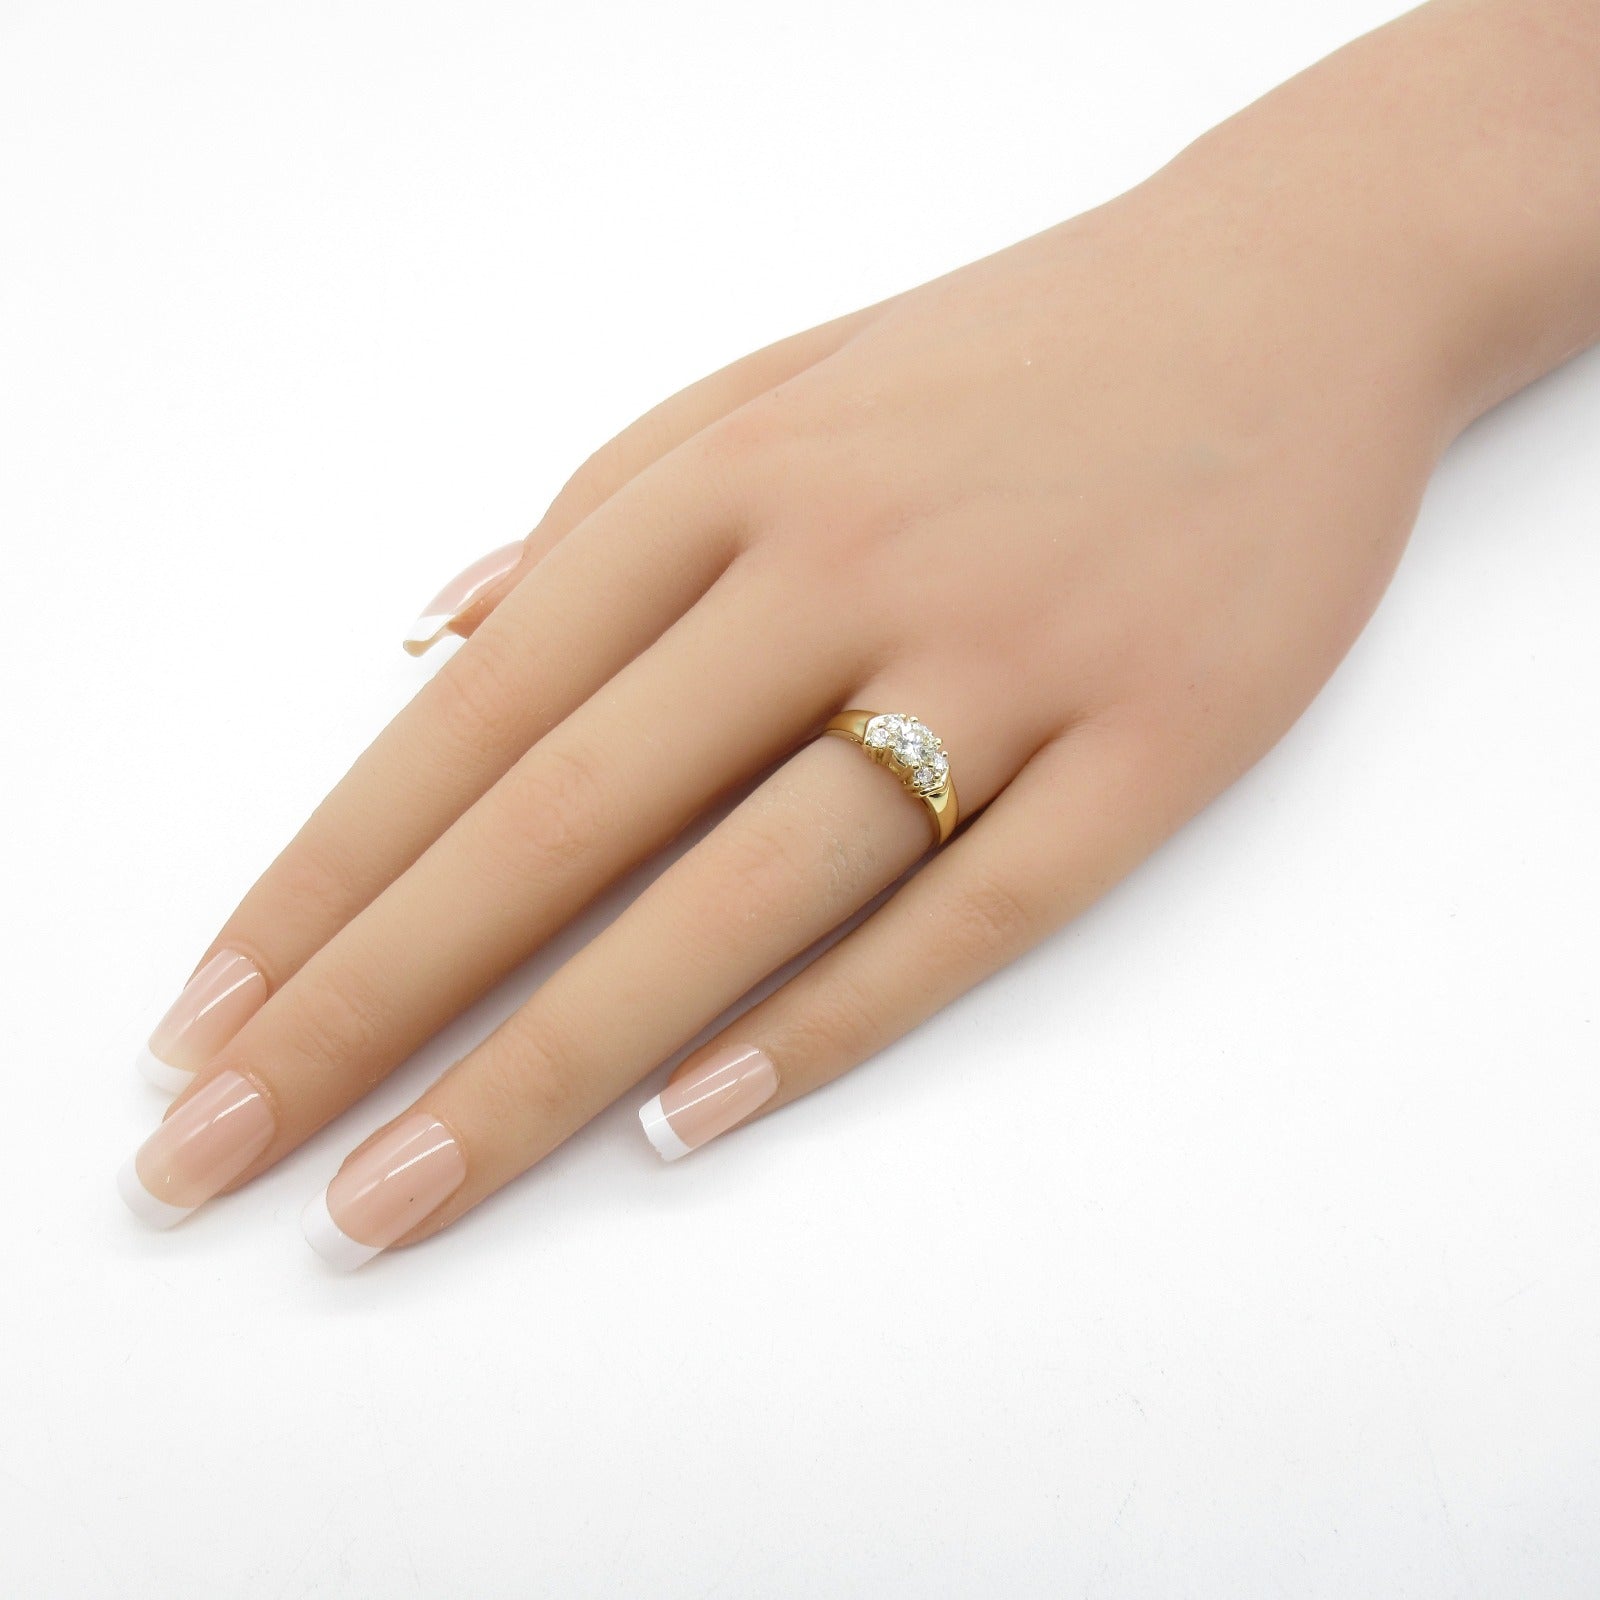 Jewelry Jewelry Diamond Ring Ring Ring Jewelry K18 (yellow g) Diamond  Clear Diamond 2.9g